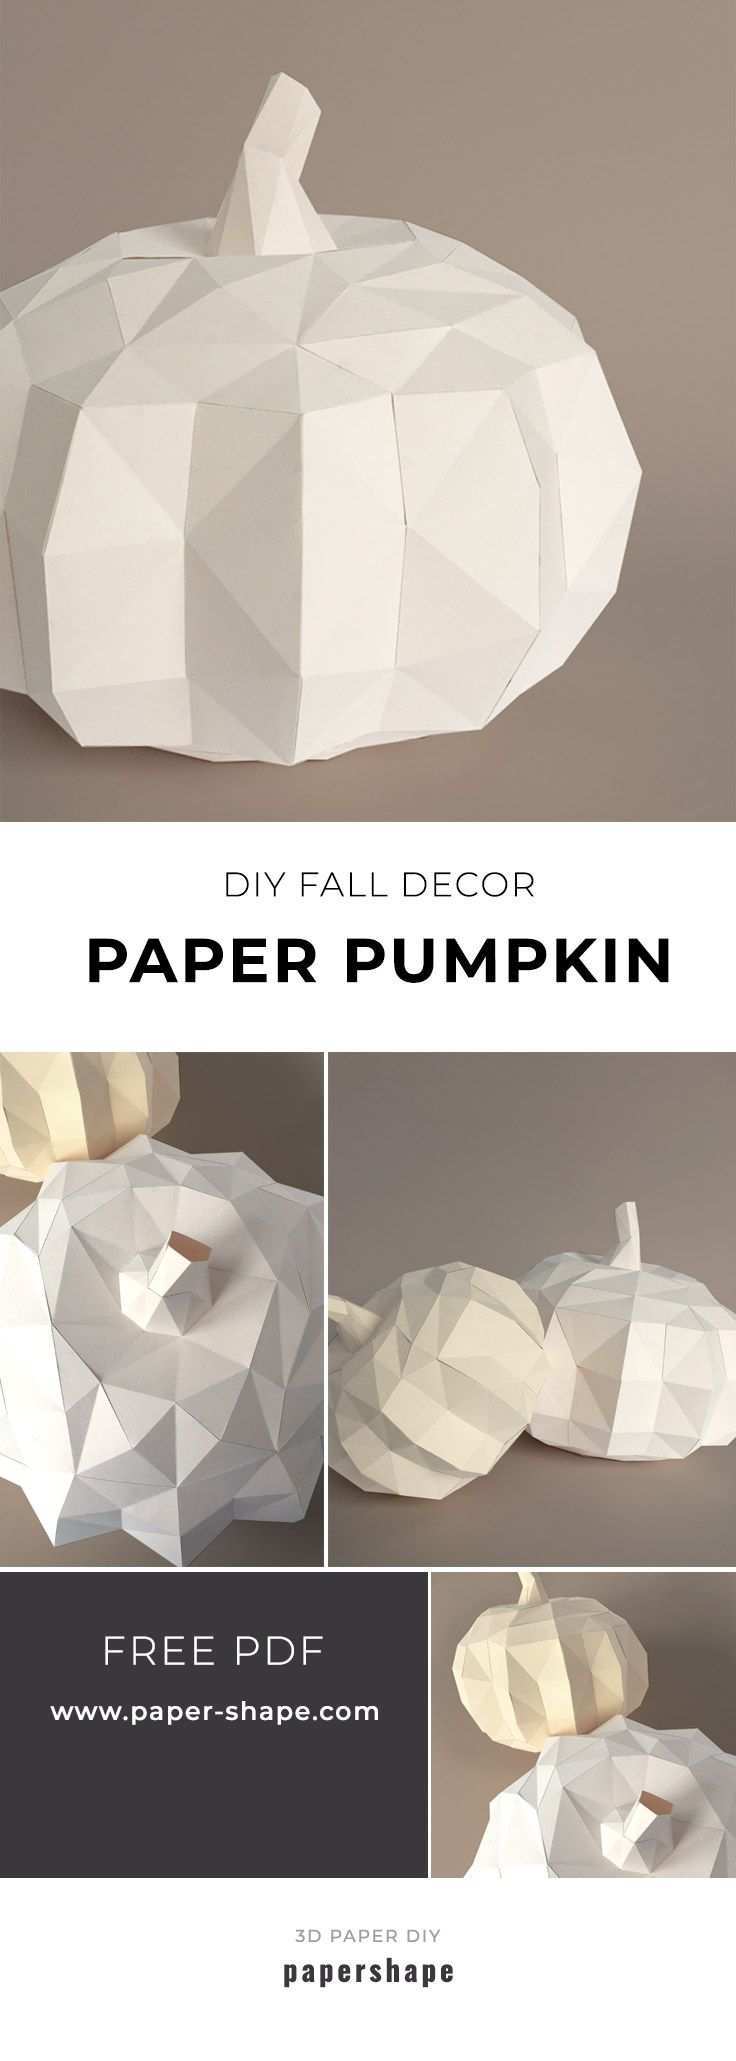 How Do I Make A Papercraft Pumpkin Fall Paper Crafts Paper Pumpkin Craft Paper Crafts Diy